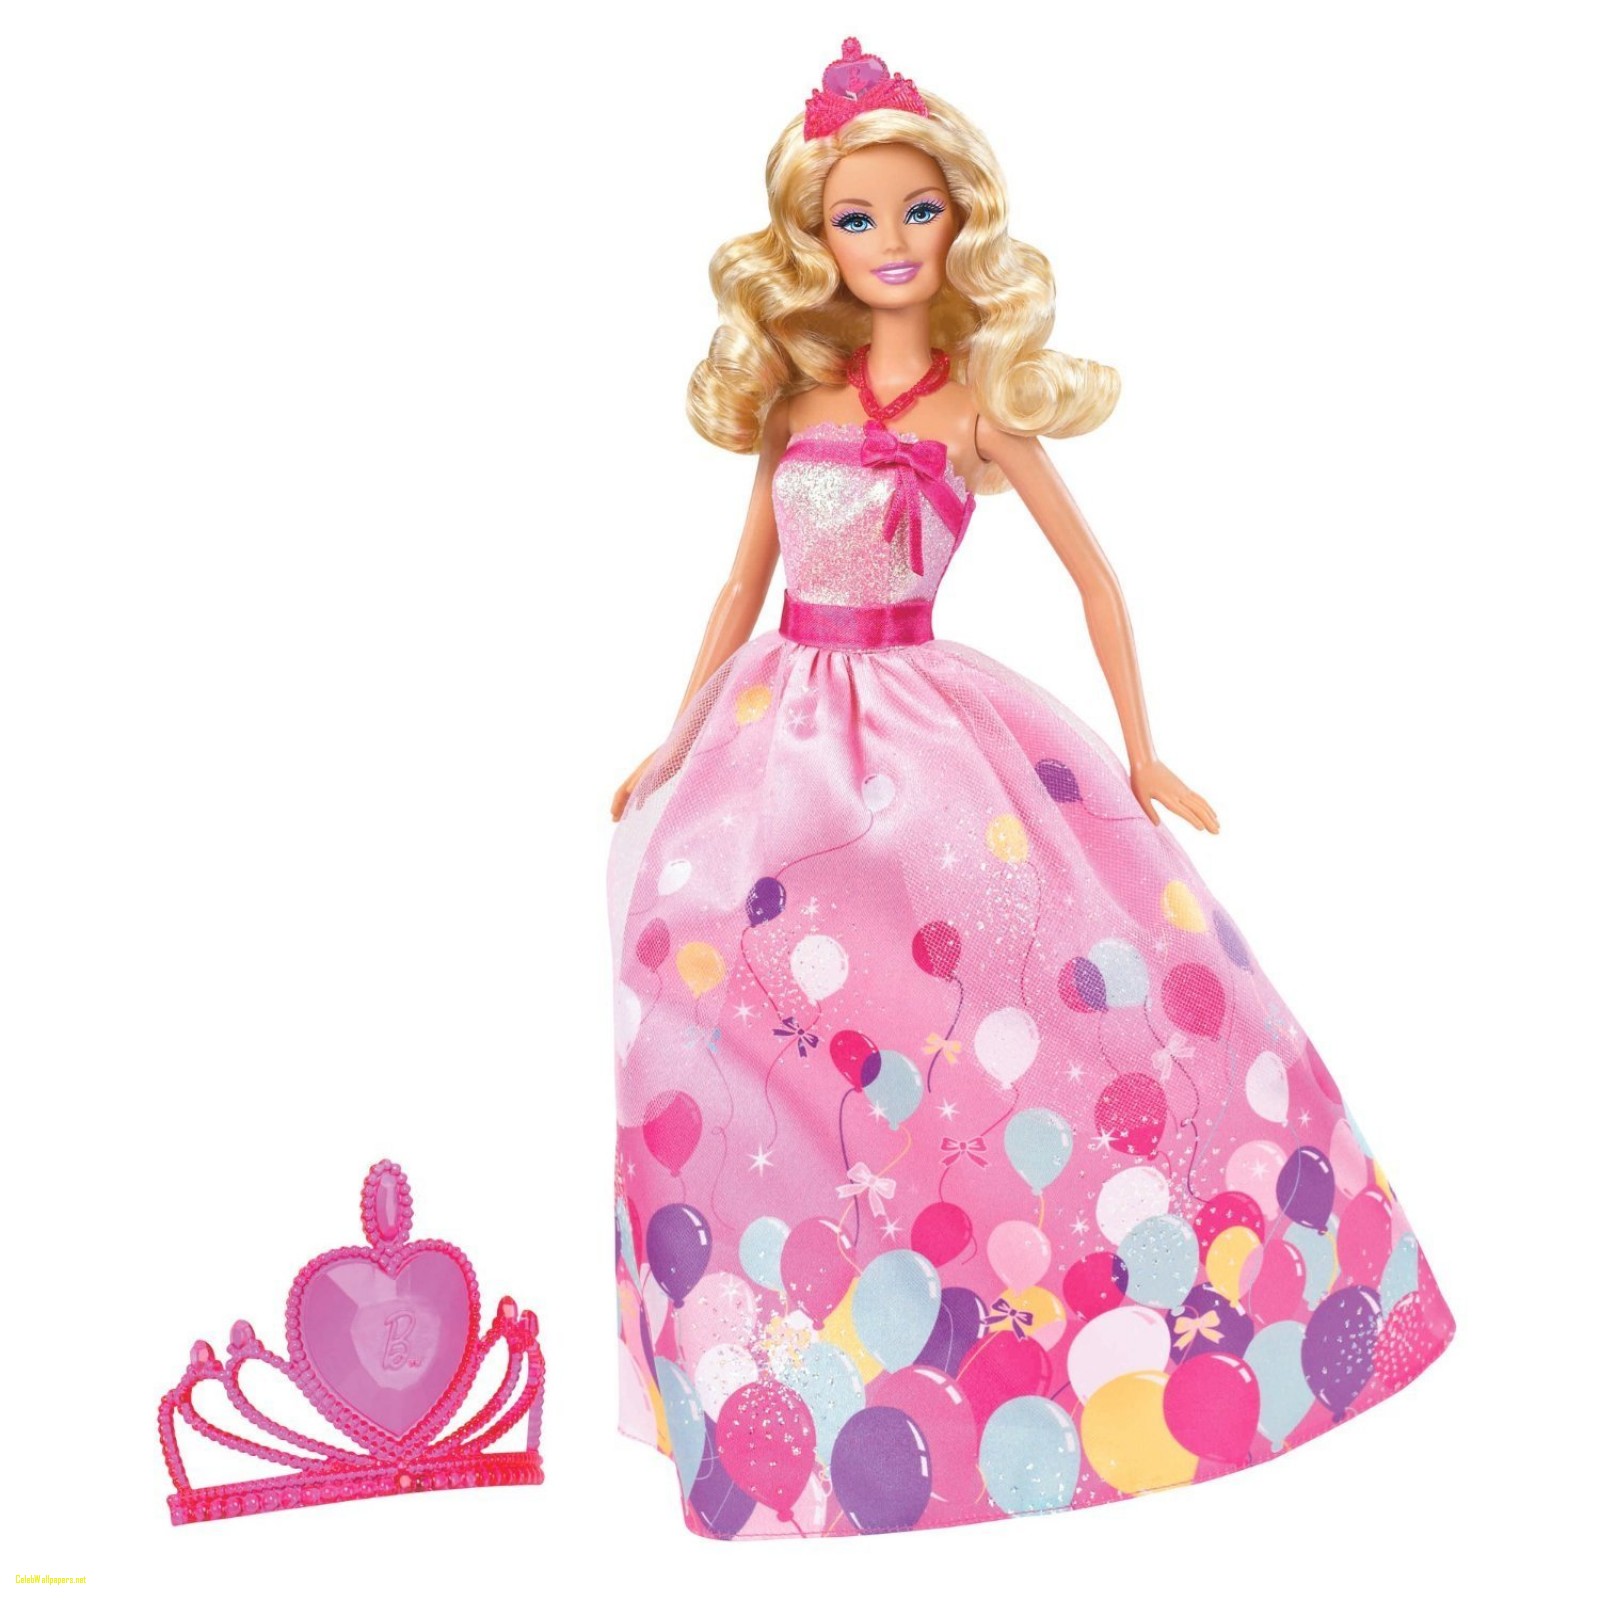 Barbie Images Download - Barbie Birthday - 1600x1600 Wallpaper 